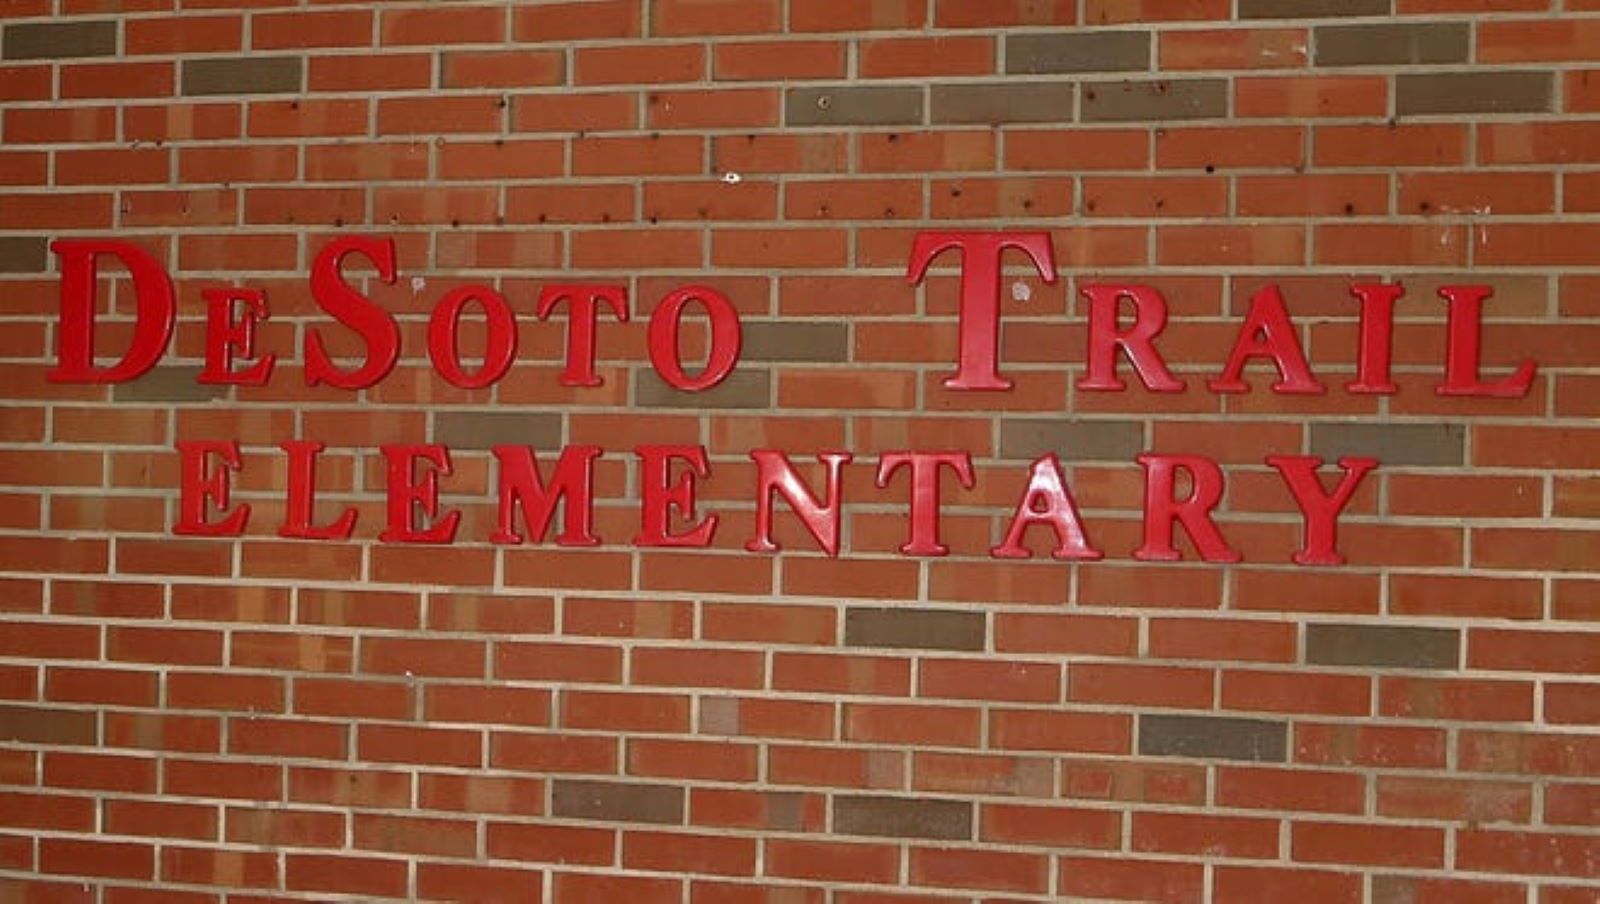 De Soto Trail Elementary